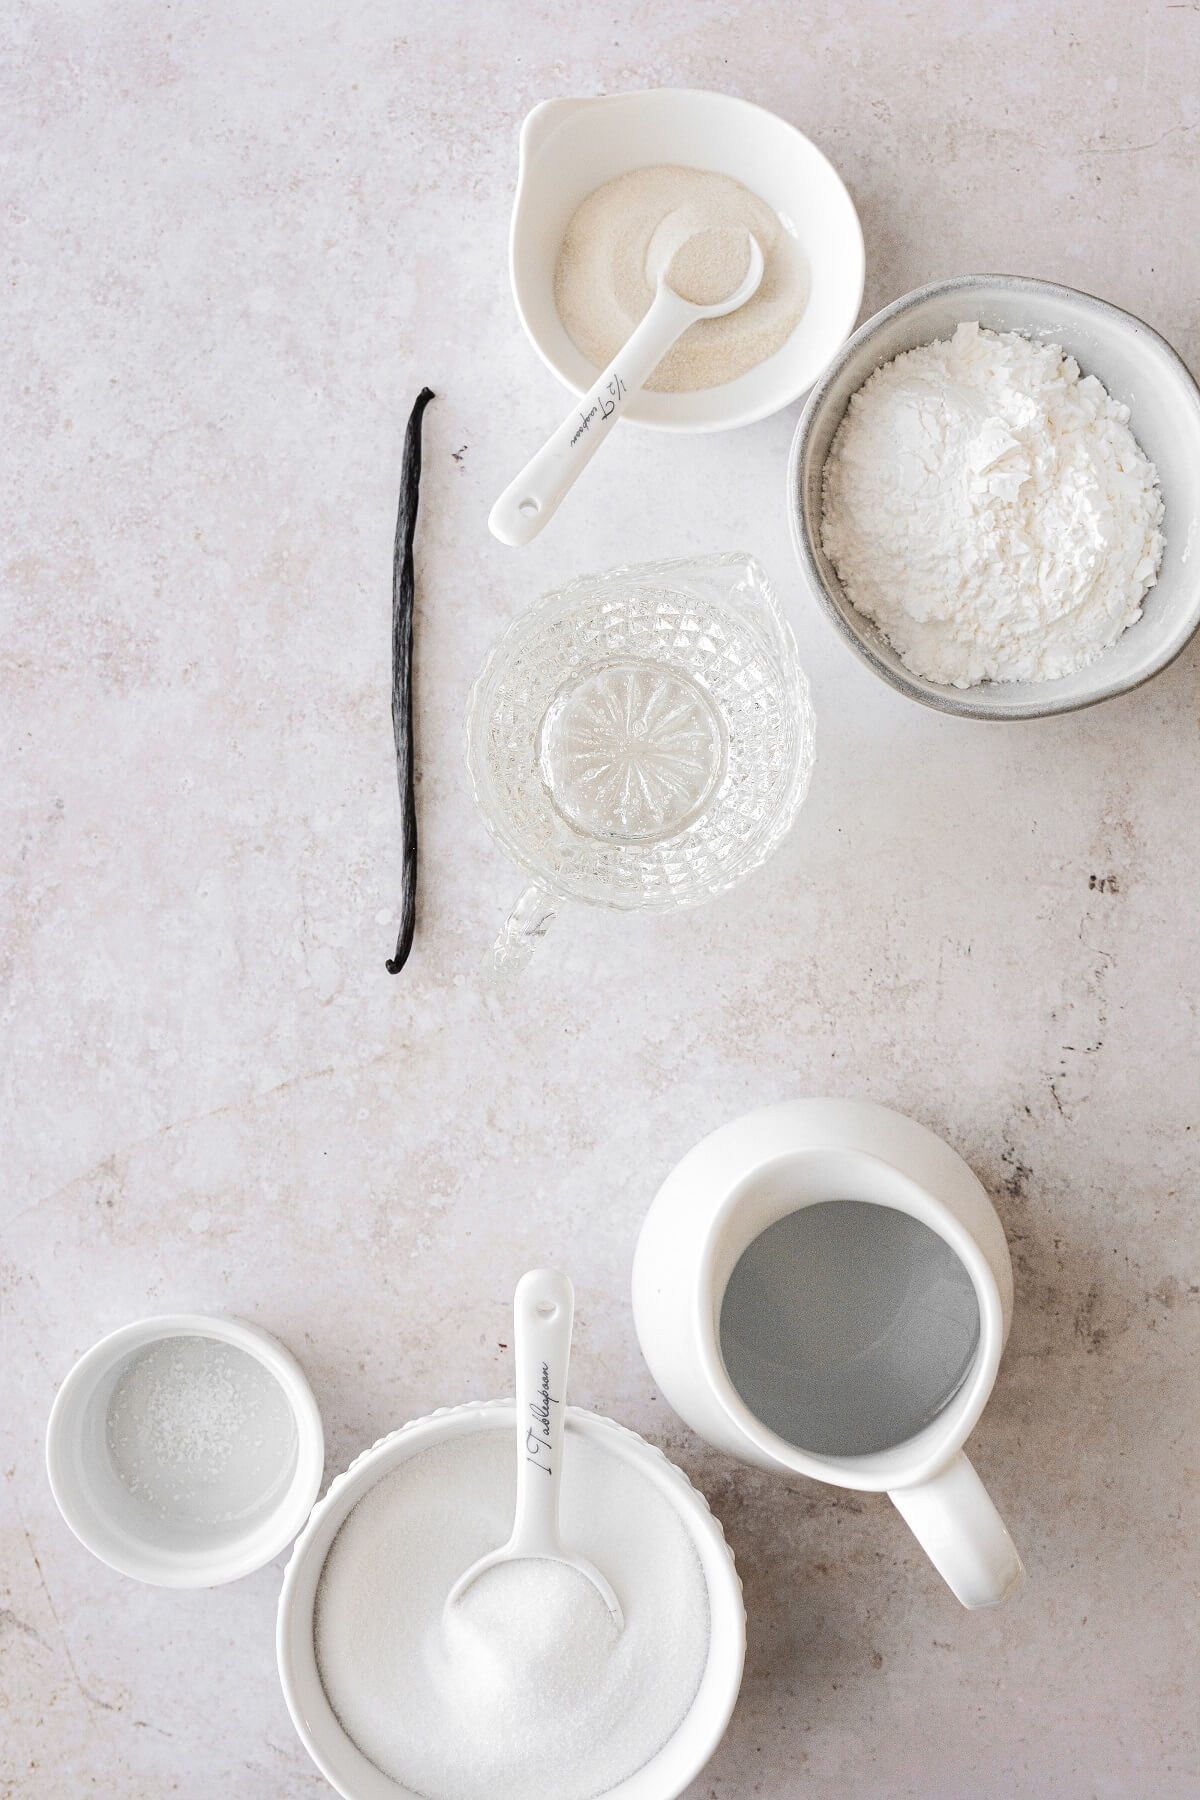 Ingredients for making homemade vanilla bean marshmallows.